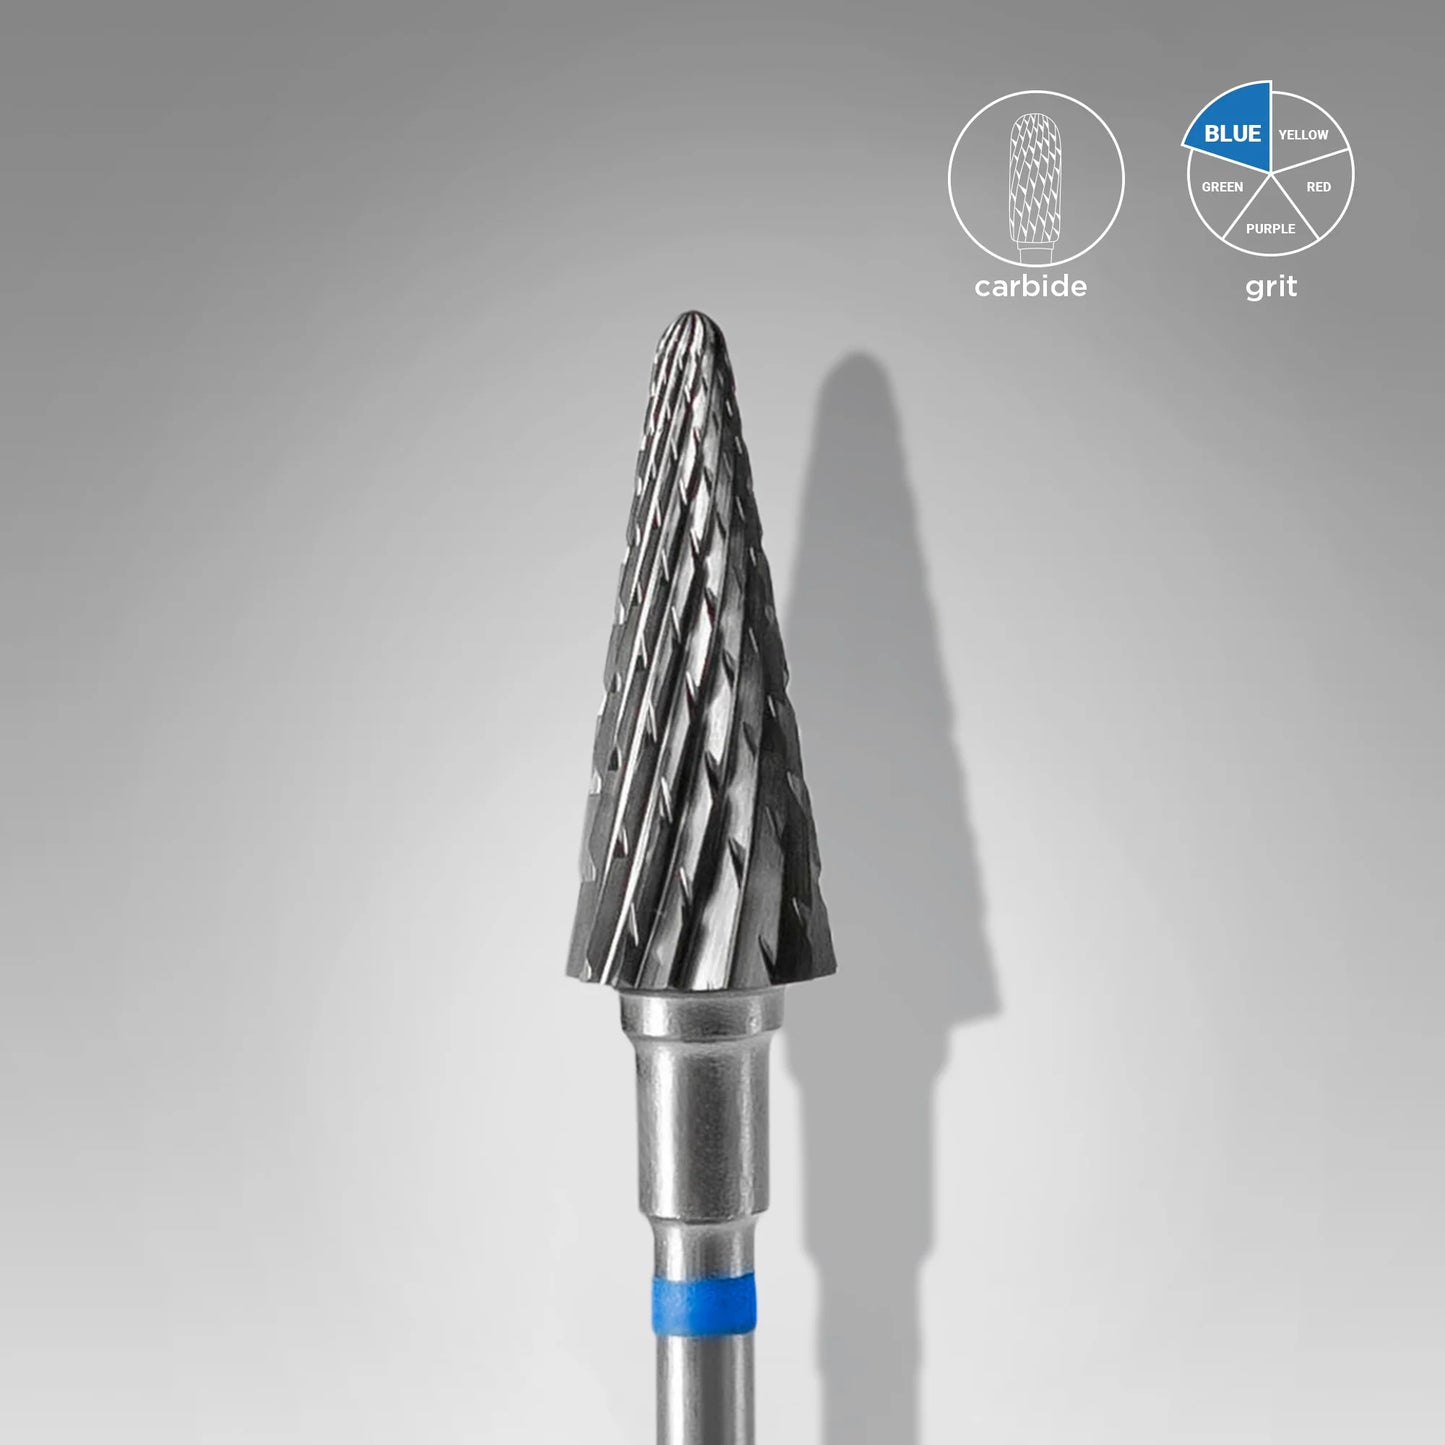 STALEKS Carbide Nail Drill Bit, "Cone" Blue, Diameter 6 Mm / Working Part 14 Mm